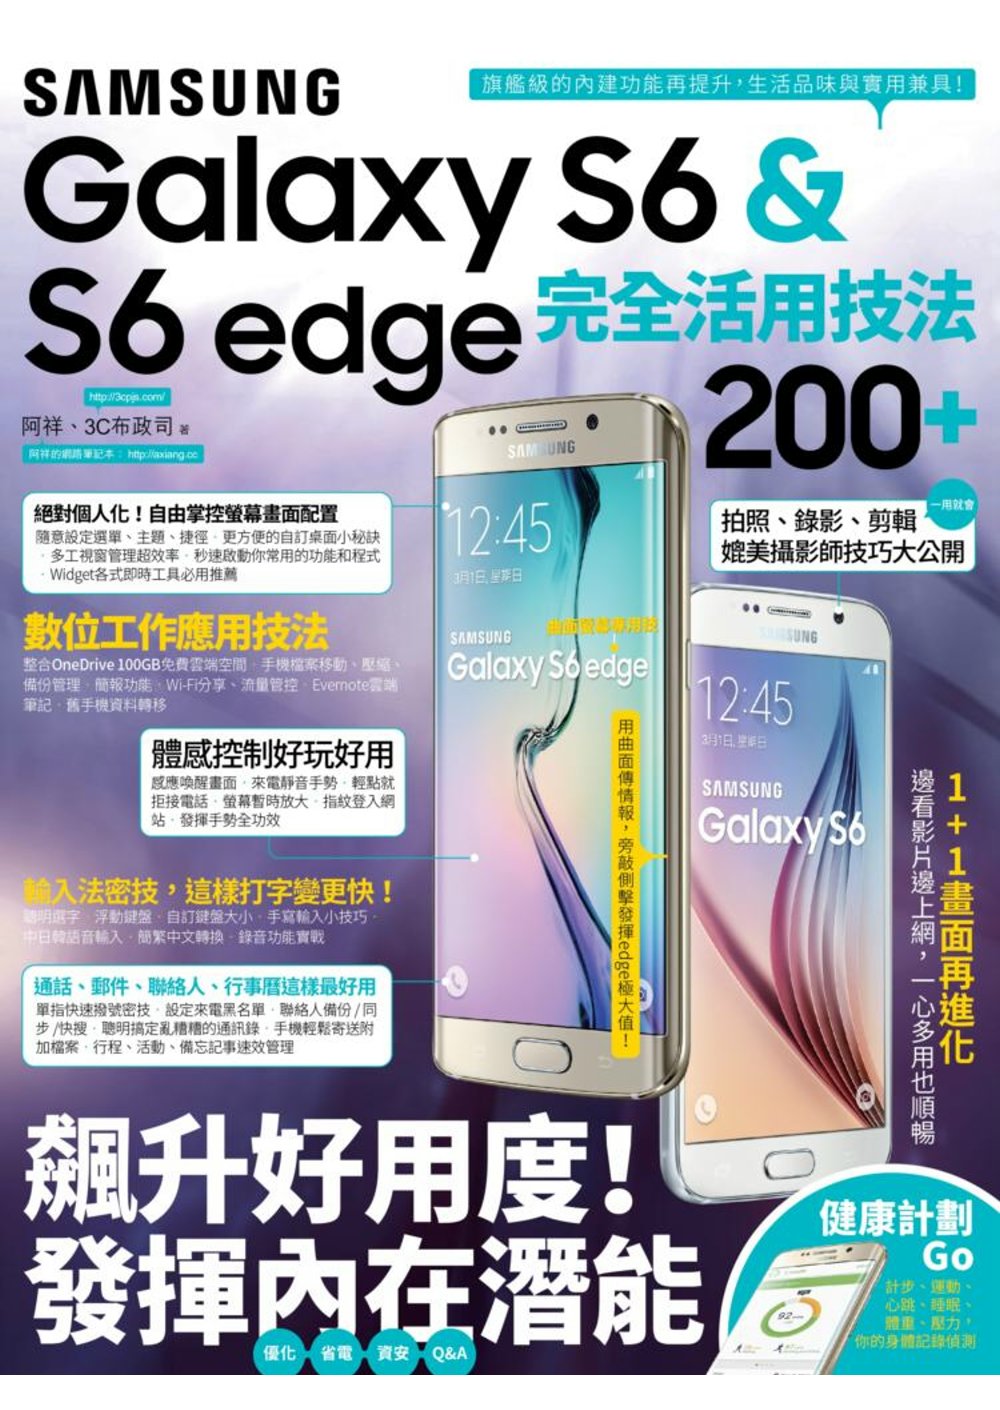 Samsung GALAXY S6 & S6 edge 完全...